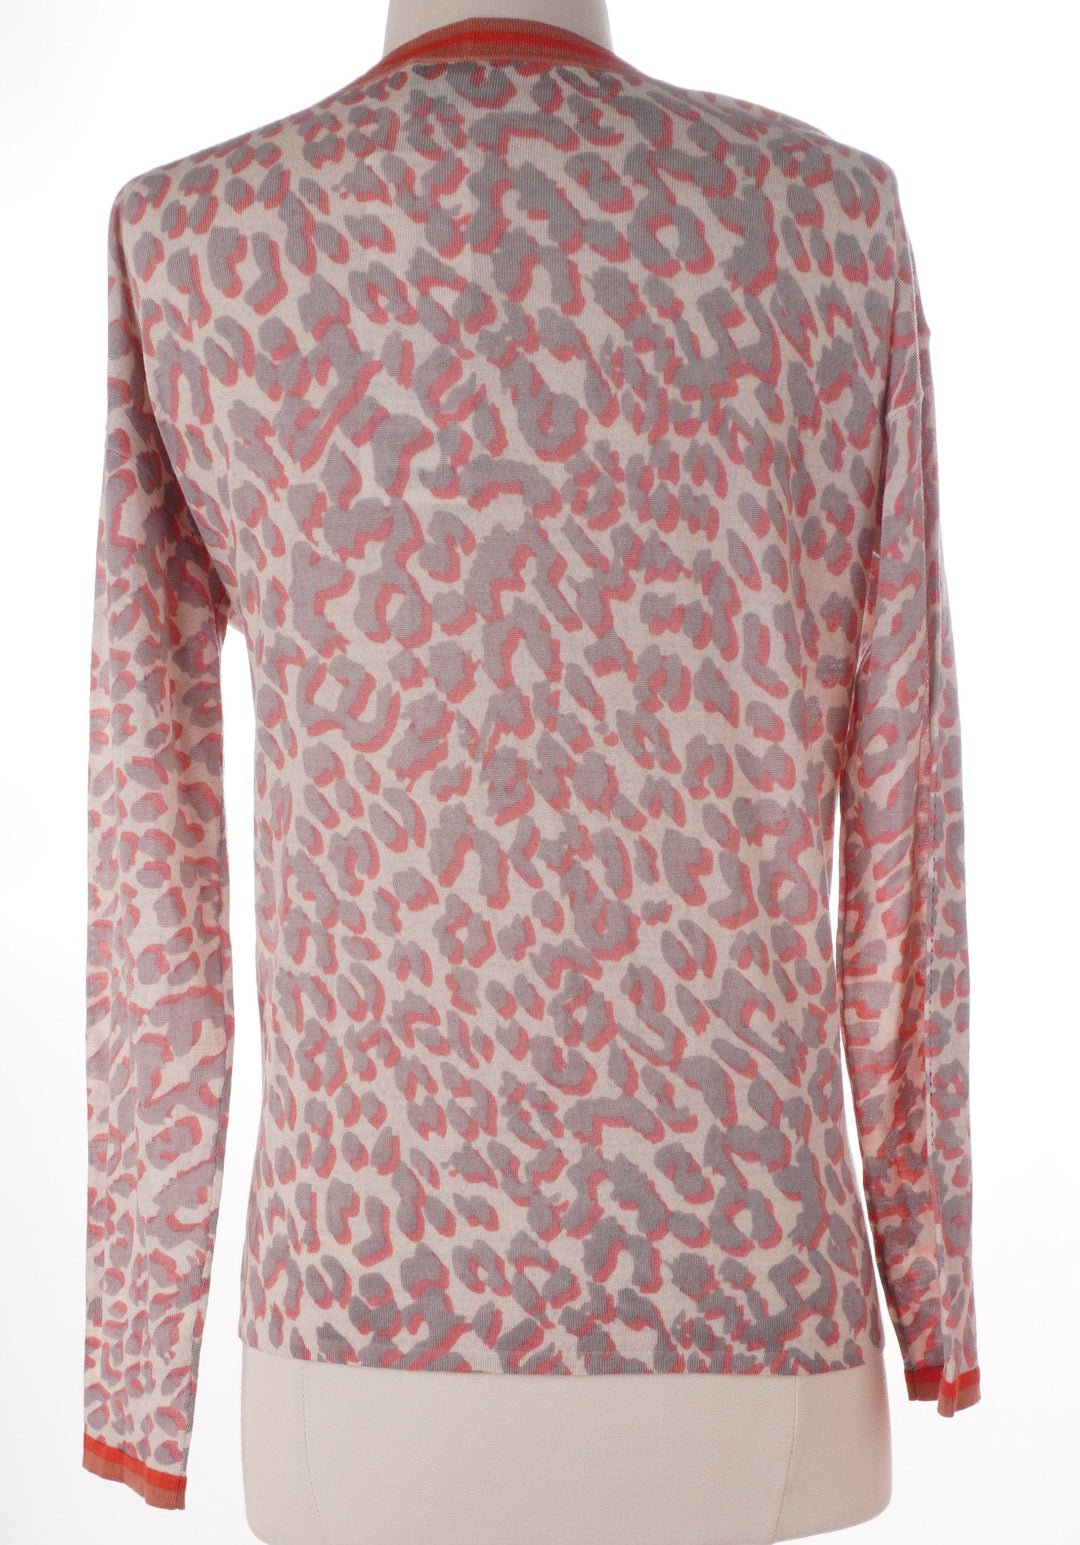 Bogner Grey / Large / Consigned Bogner Rena Cheetah Sweater - Grey/Pink - Size Medium